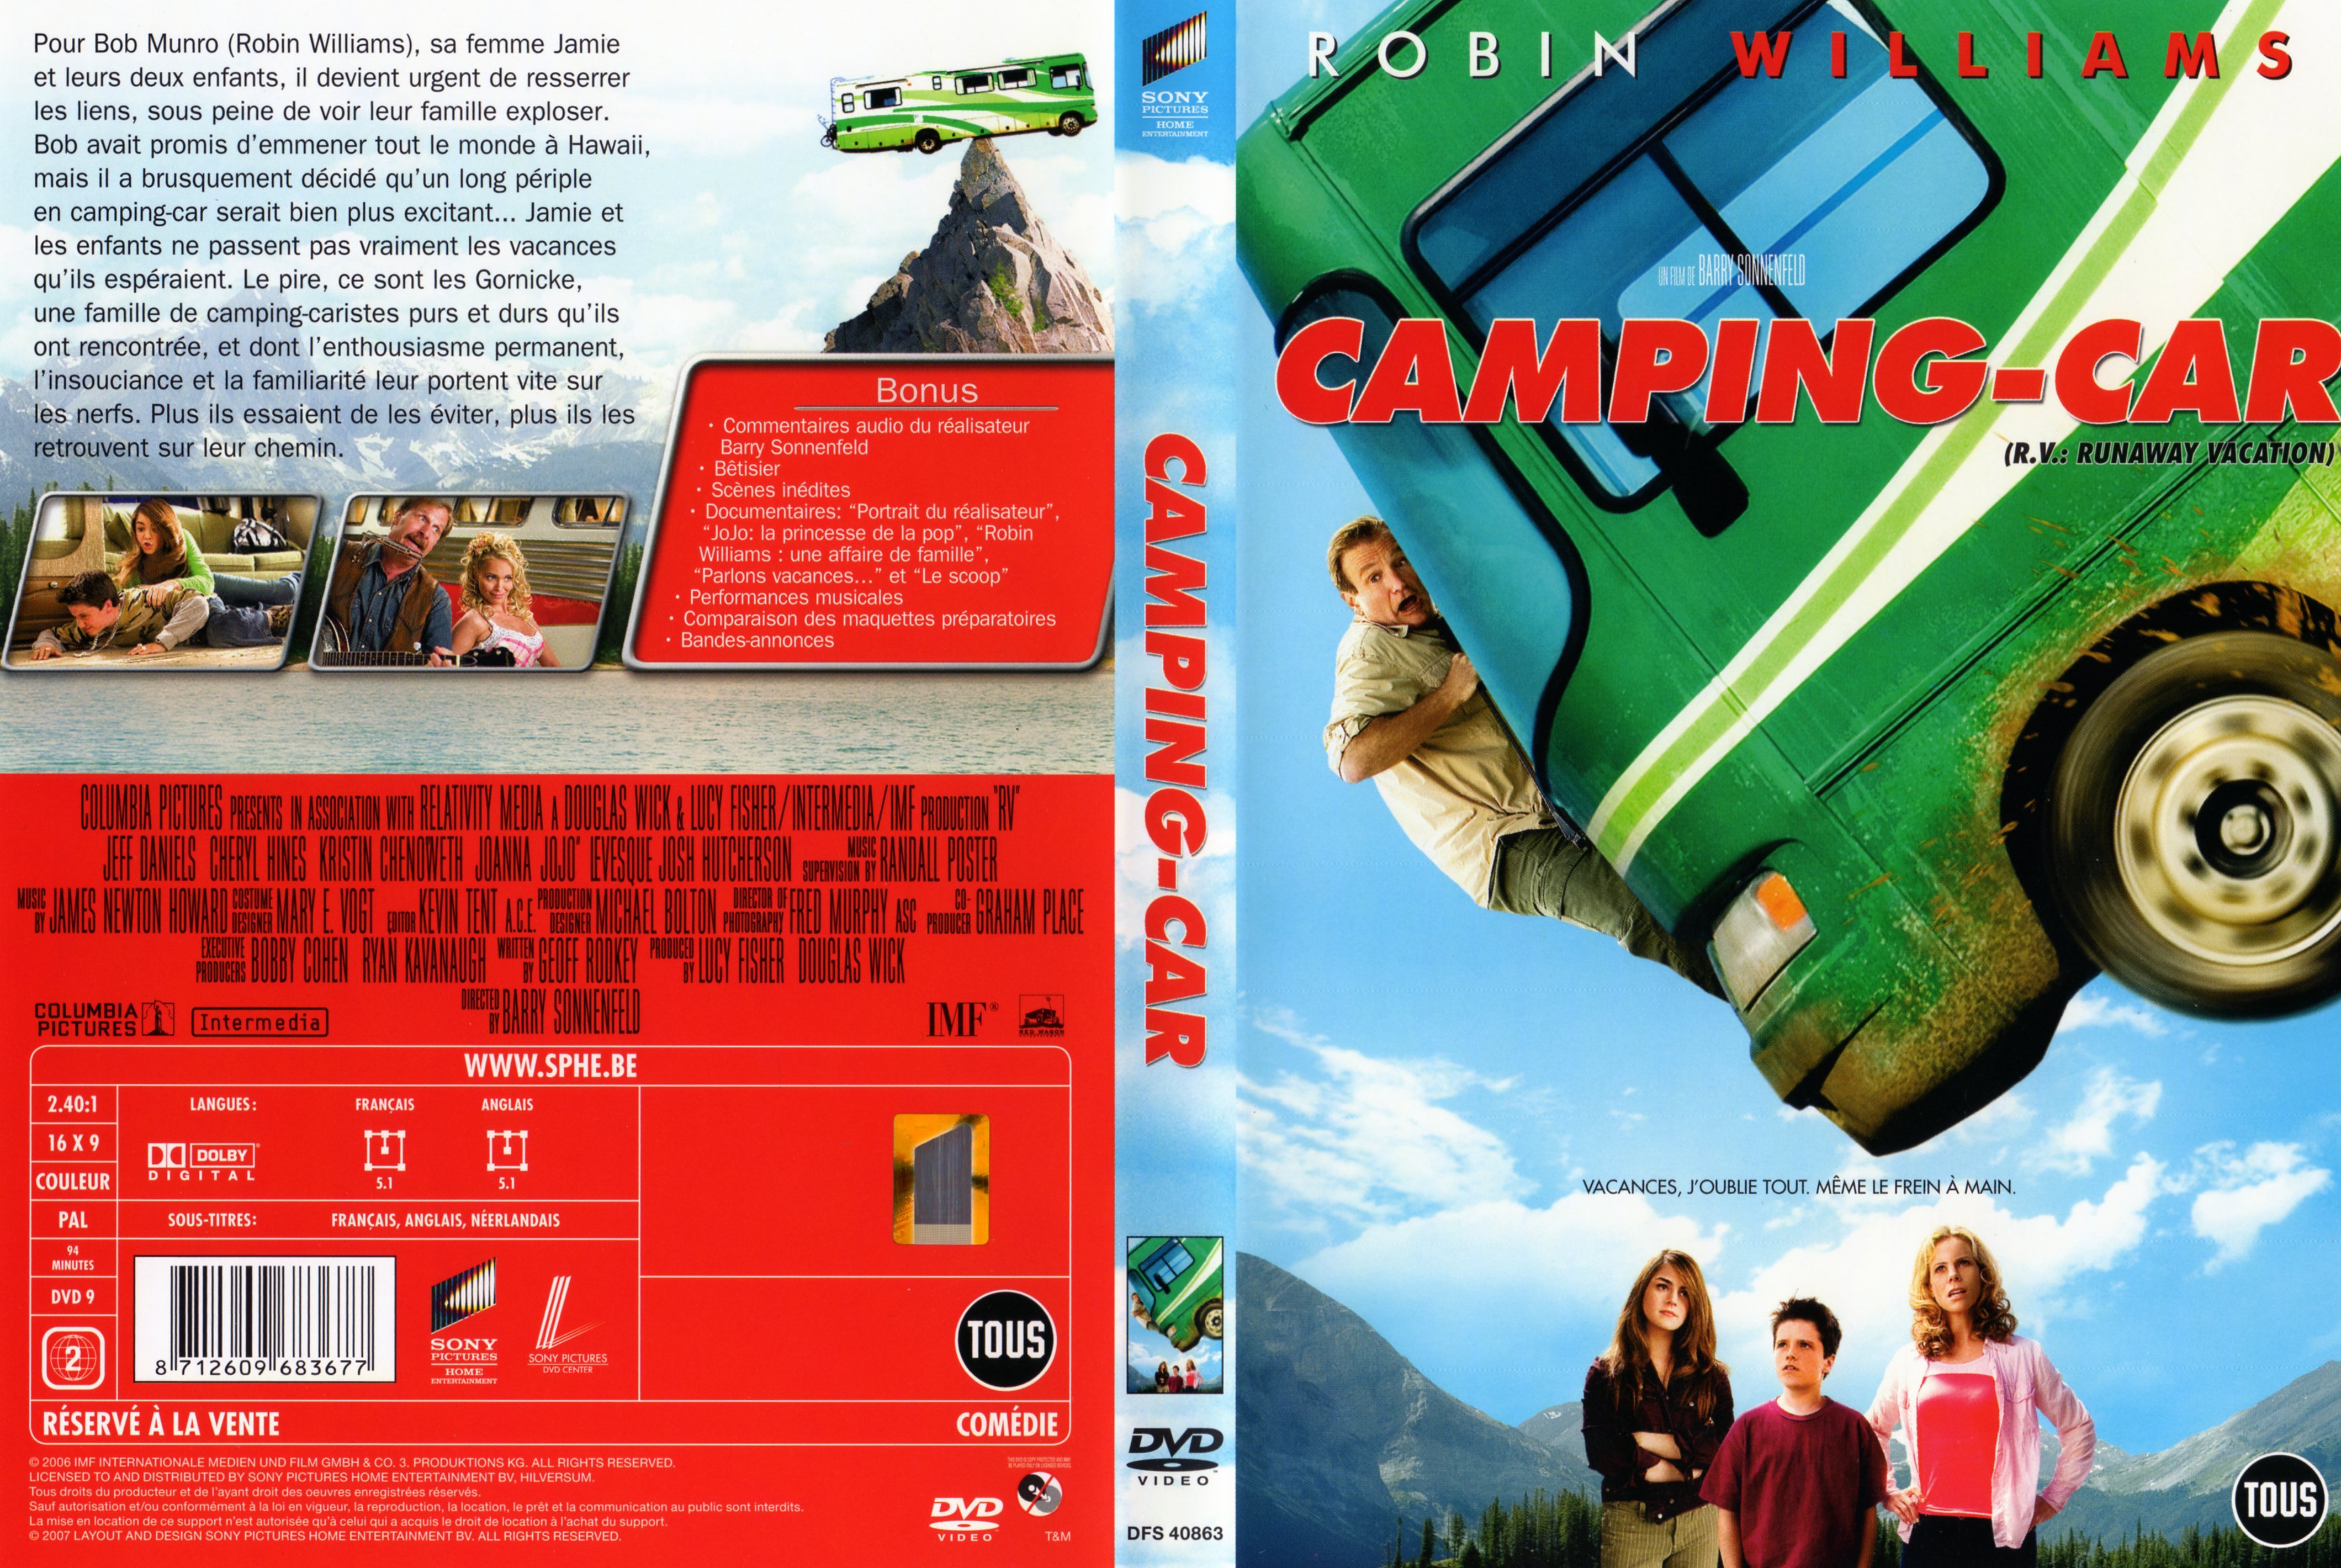 Jaquette DVD Camping car v2